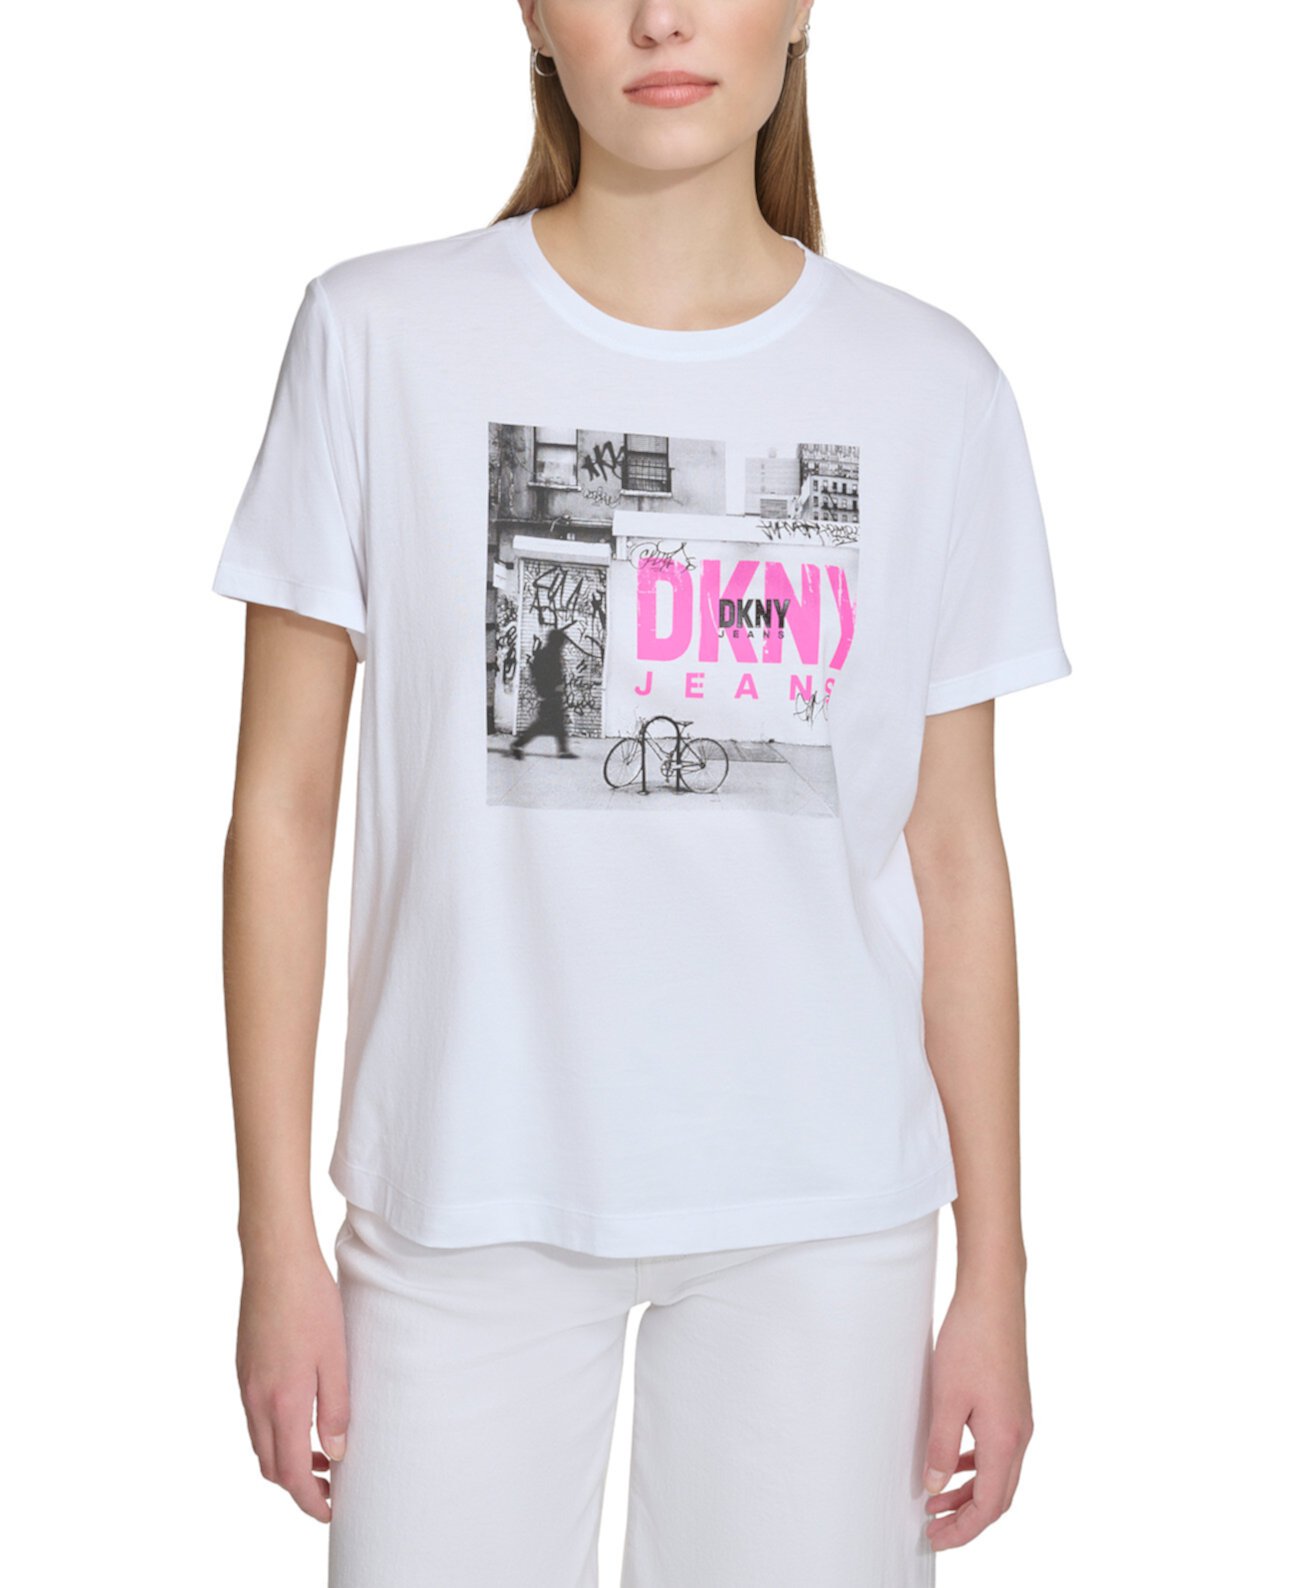 Женская футболка с логотипом в стиле граффити DKNY